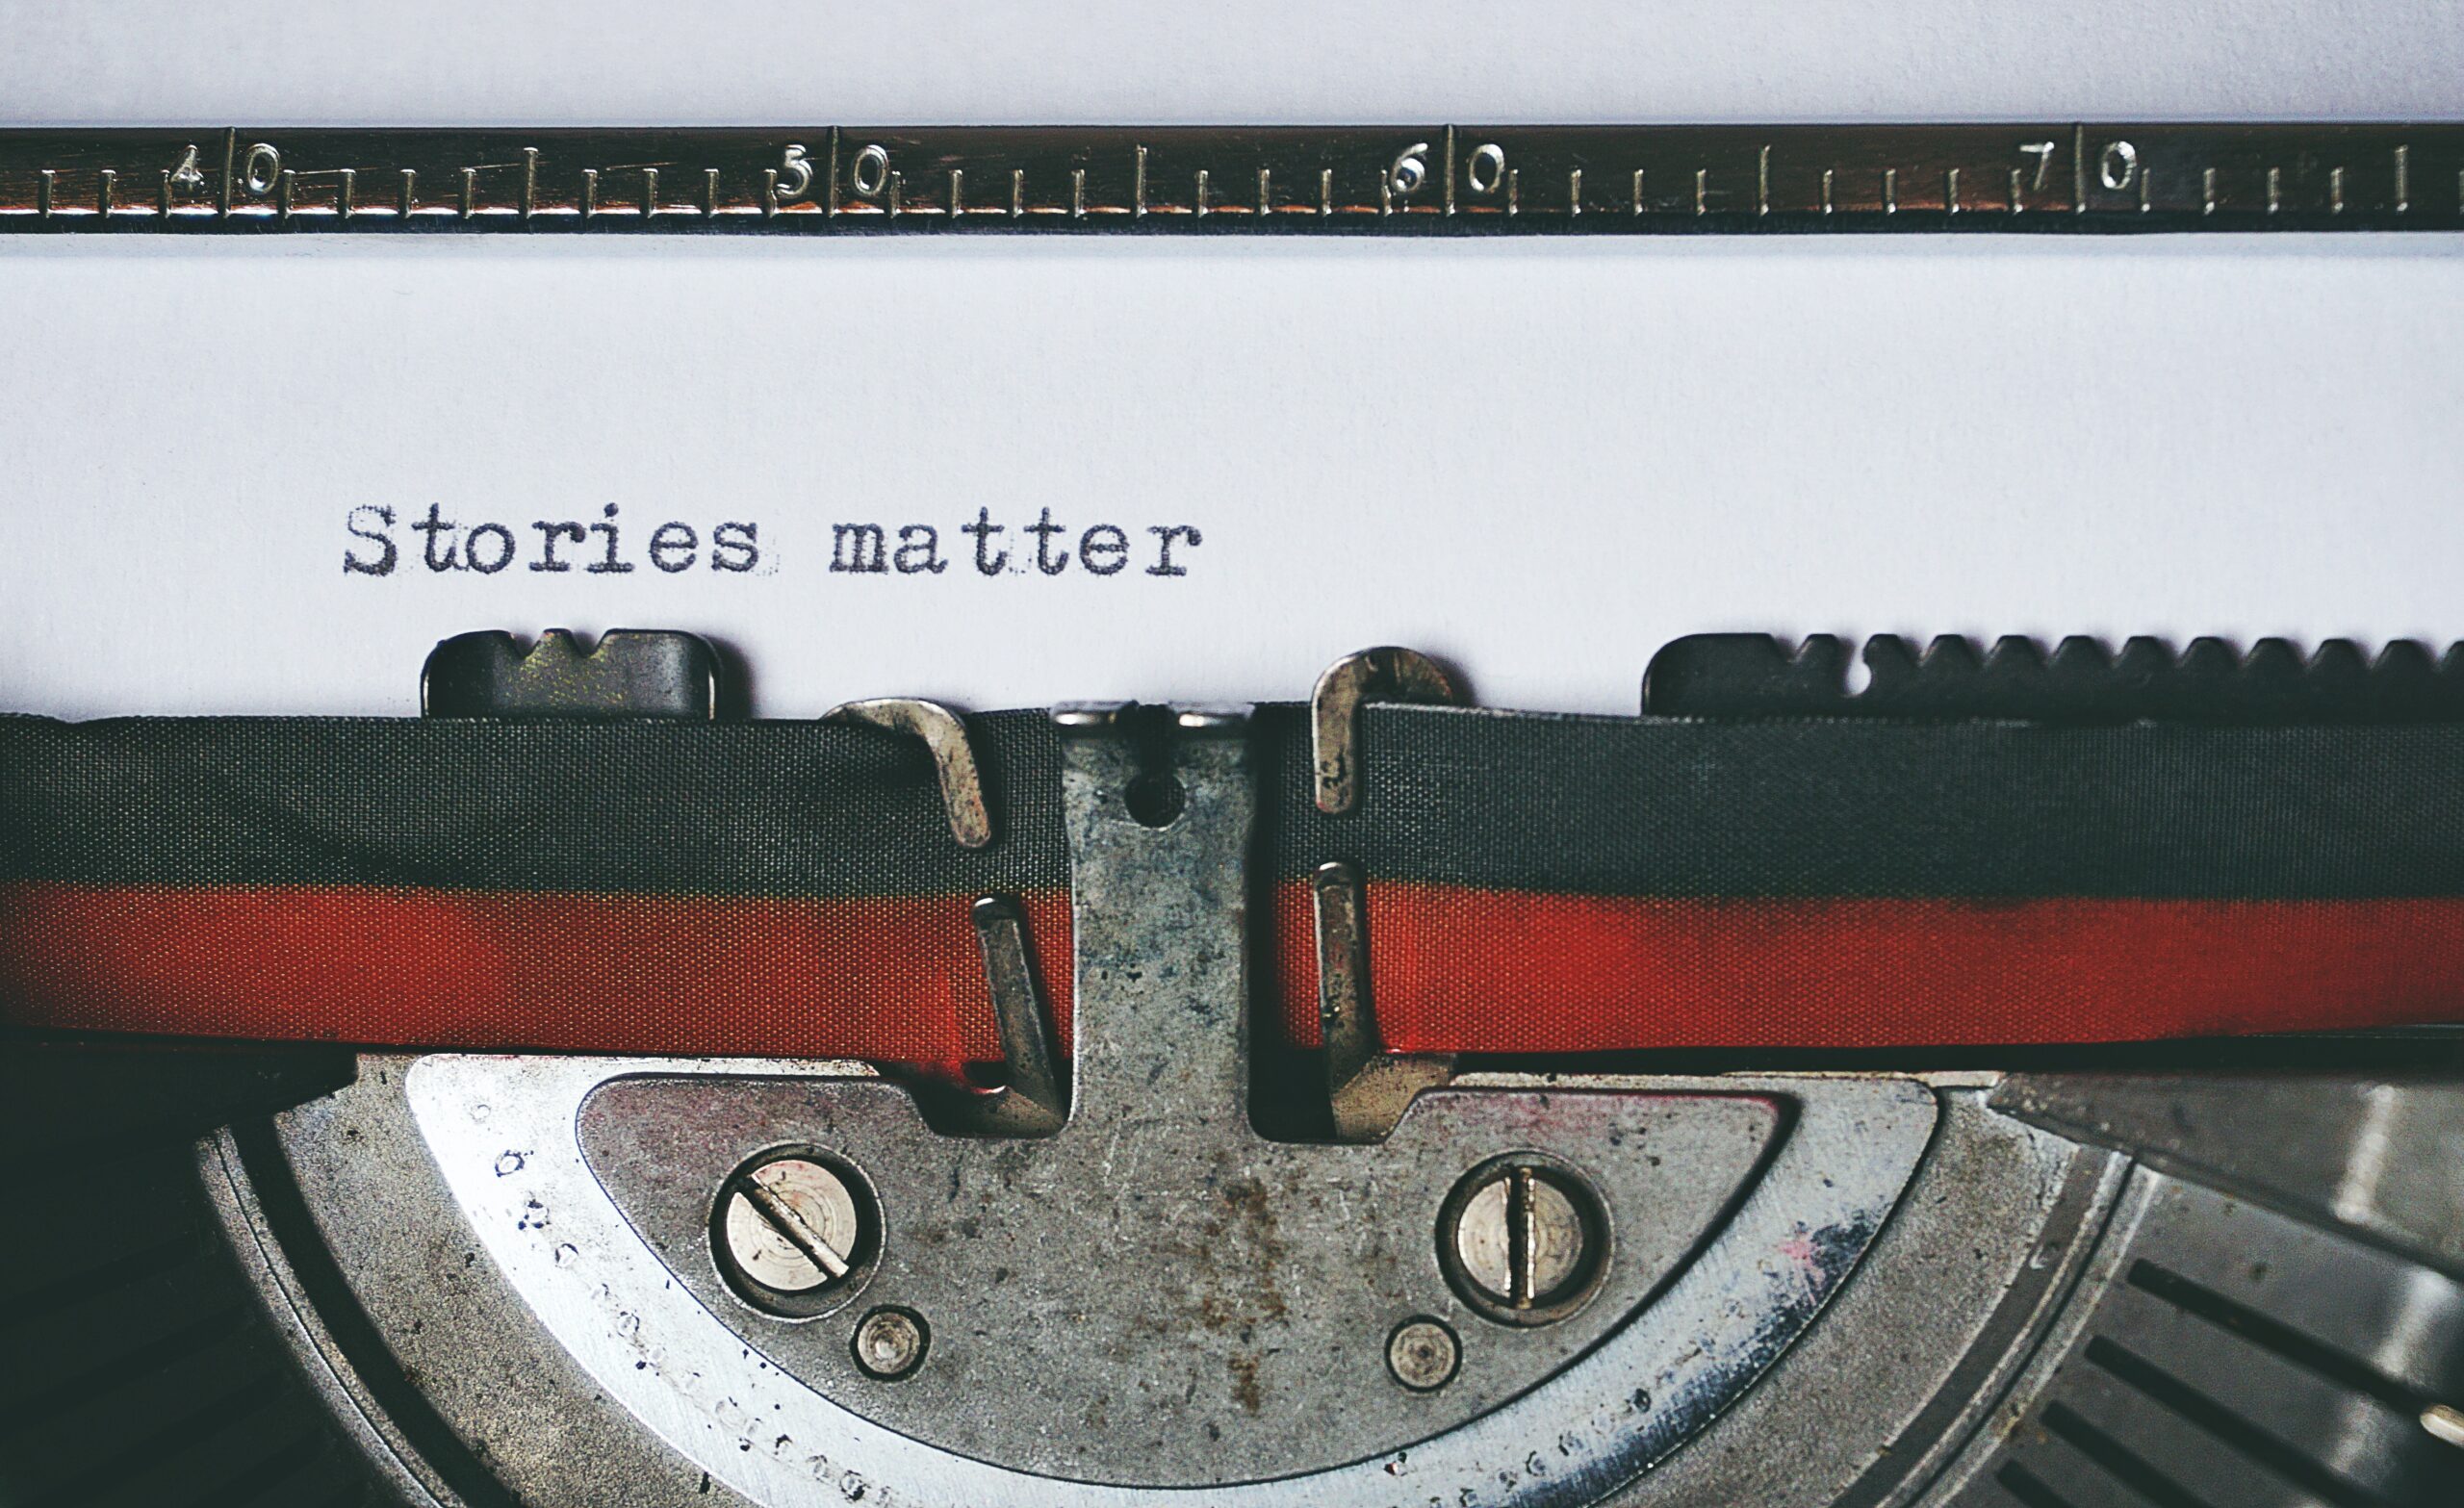 The words Stories matter written on a typewriter